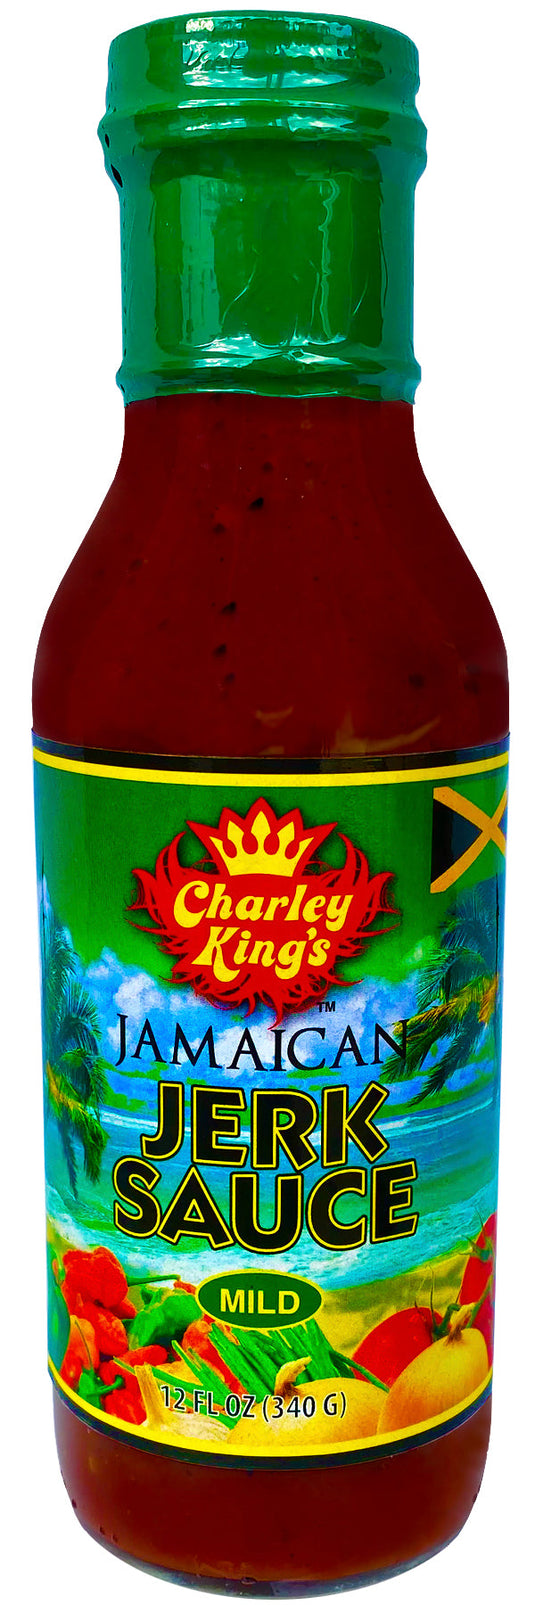 Charley King's Jamaican Jerk Sauce – Mild